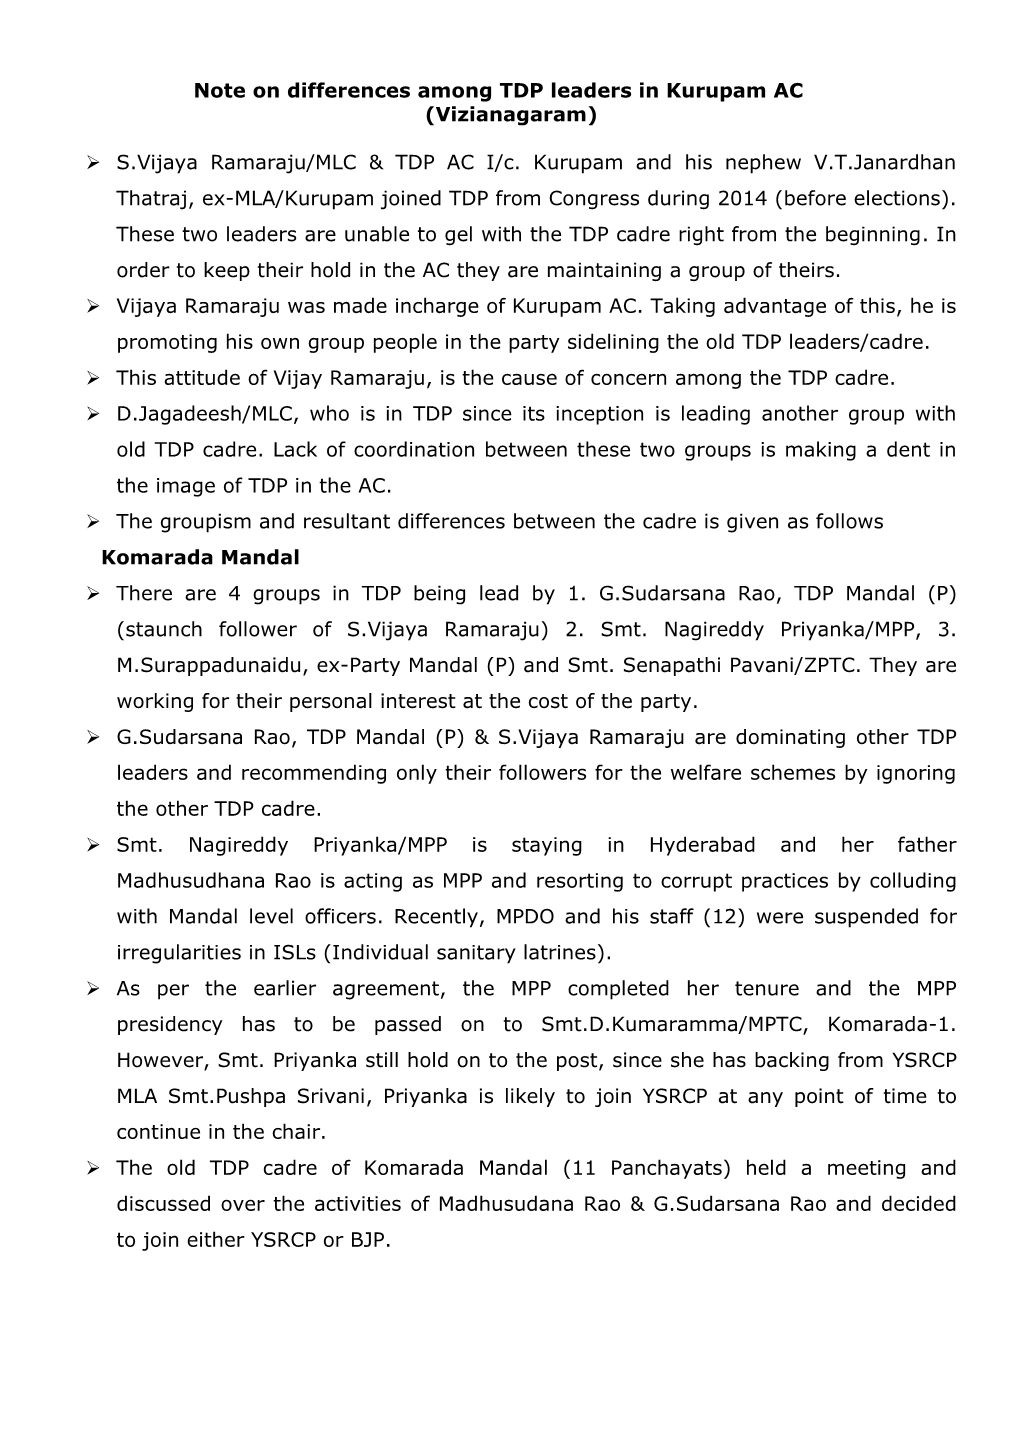 Note on Differences Among TDP Leaders in Kurupam AC (Vizianagaram)